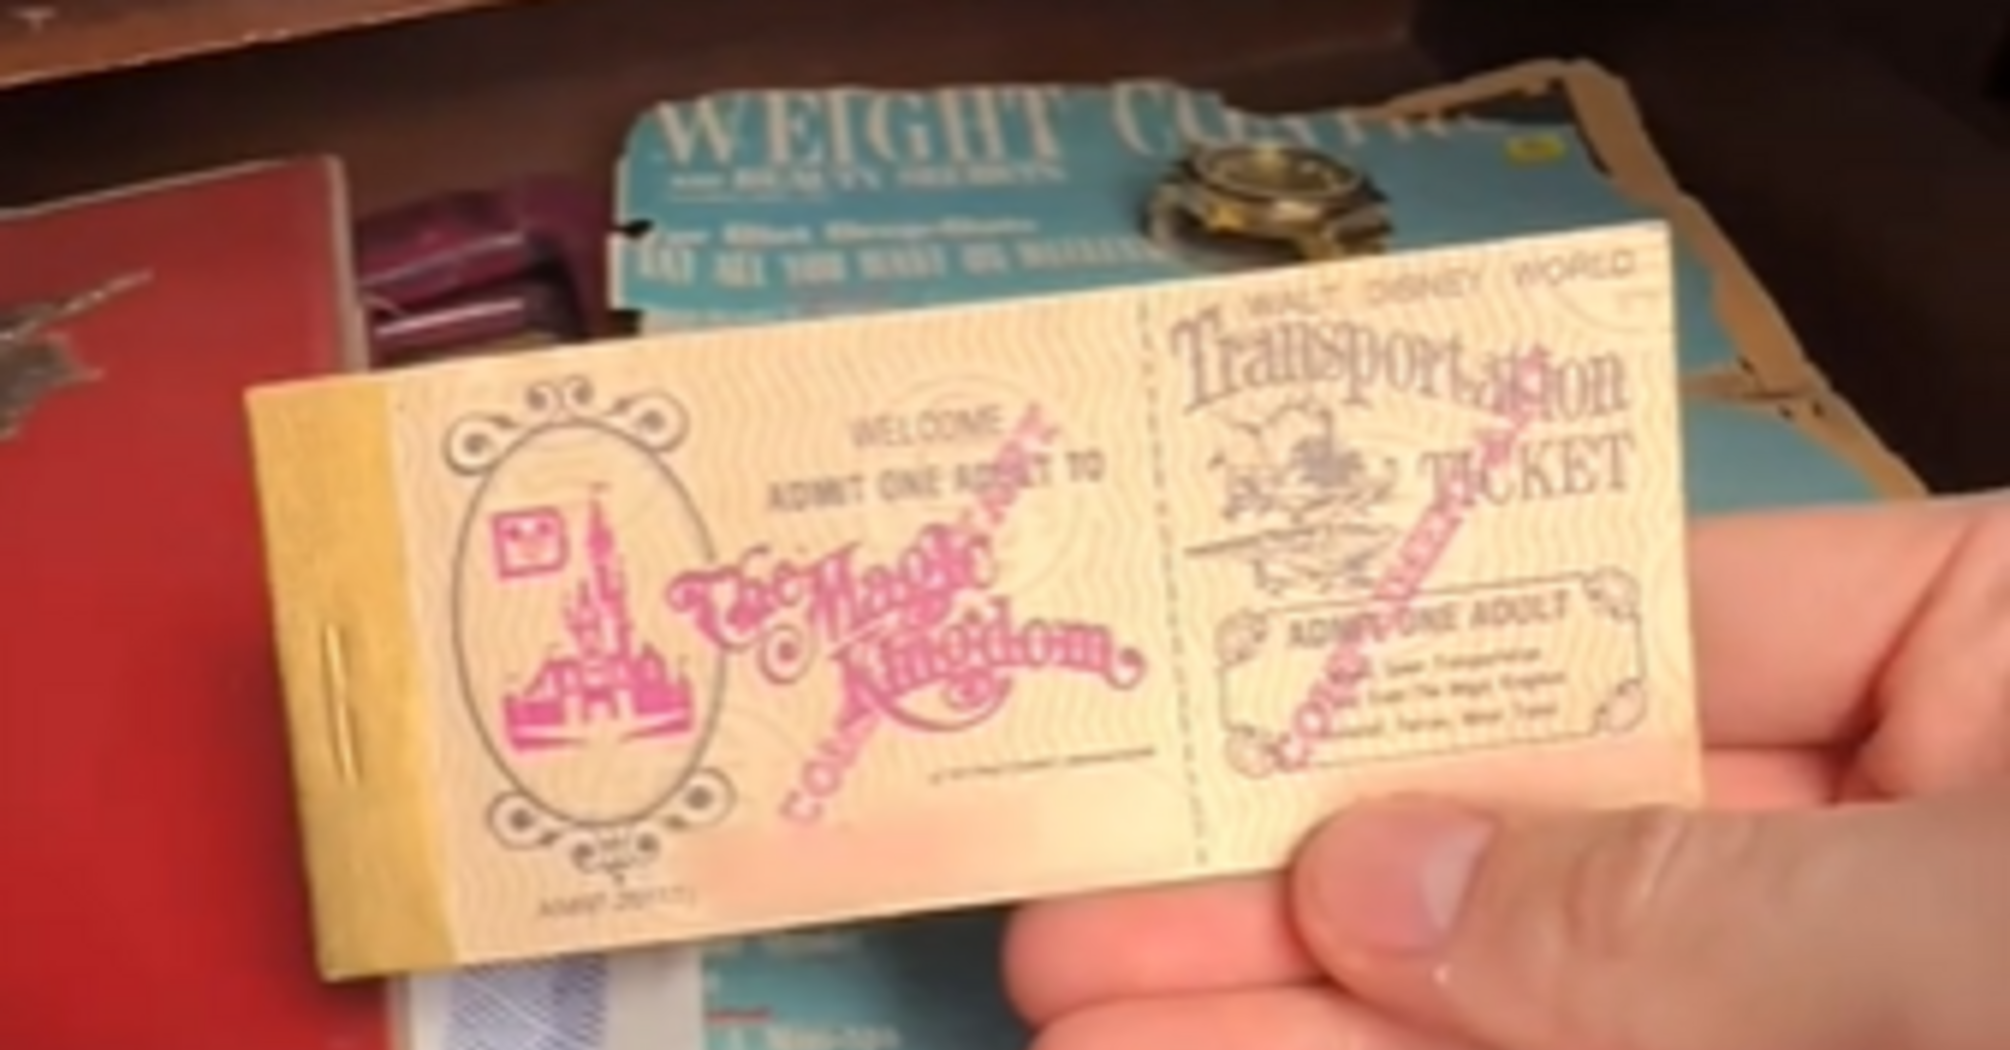 A rare "golden ticket" to Disney World